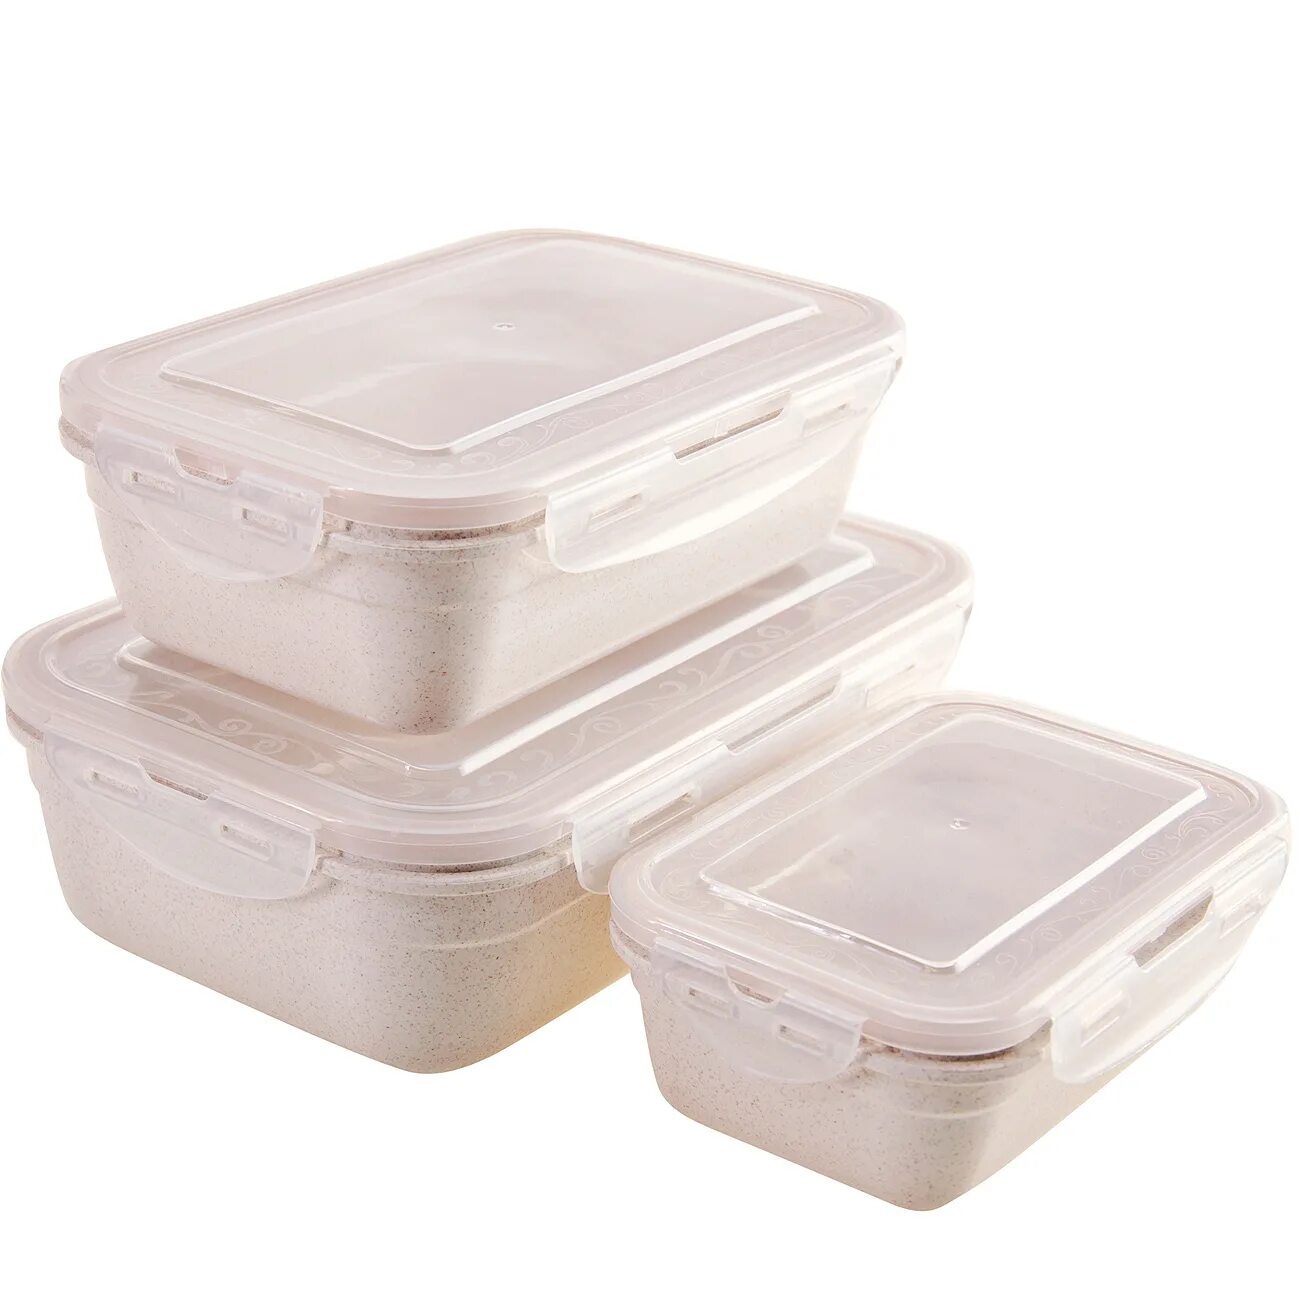 Vetta набор контейнеров пищевых Smart Box,60мл, 6шт, пластик. 29548 Набор из 3-х контейнеров пластик MB (х48). Yamada набор контейнеров million Pack 1553. Контейнер Mayer & Boch 29697. Производители пластиковых контейнеров